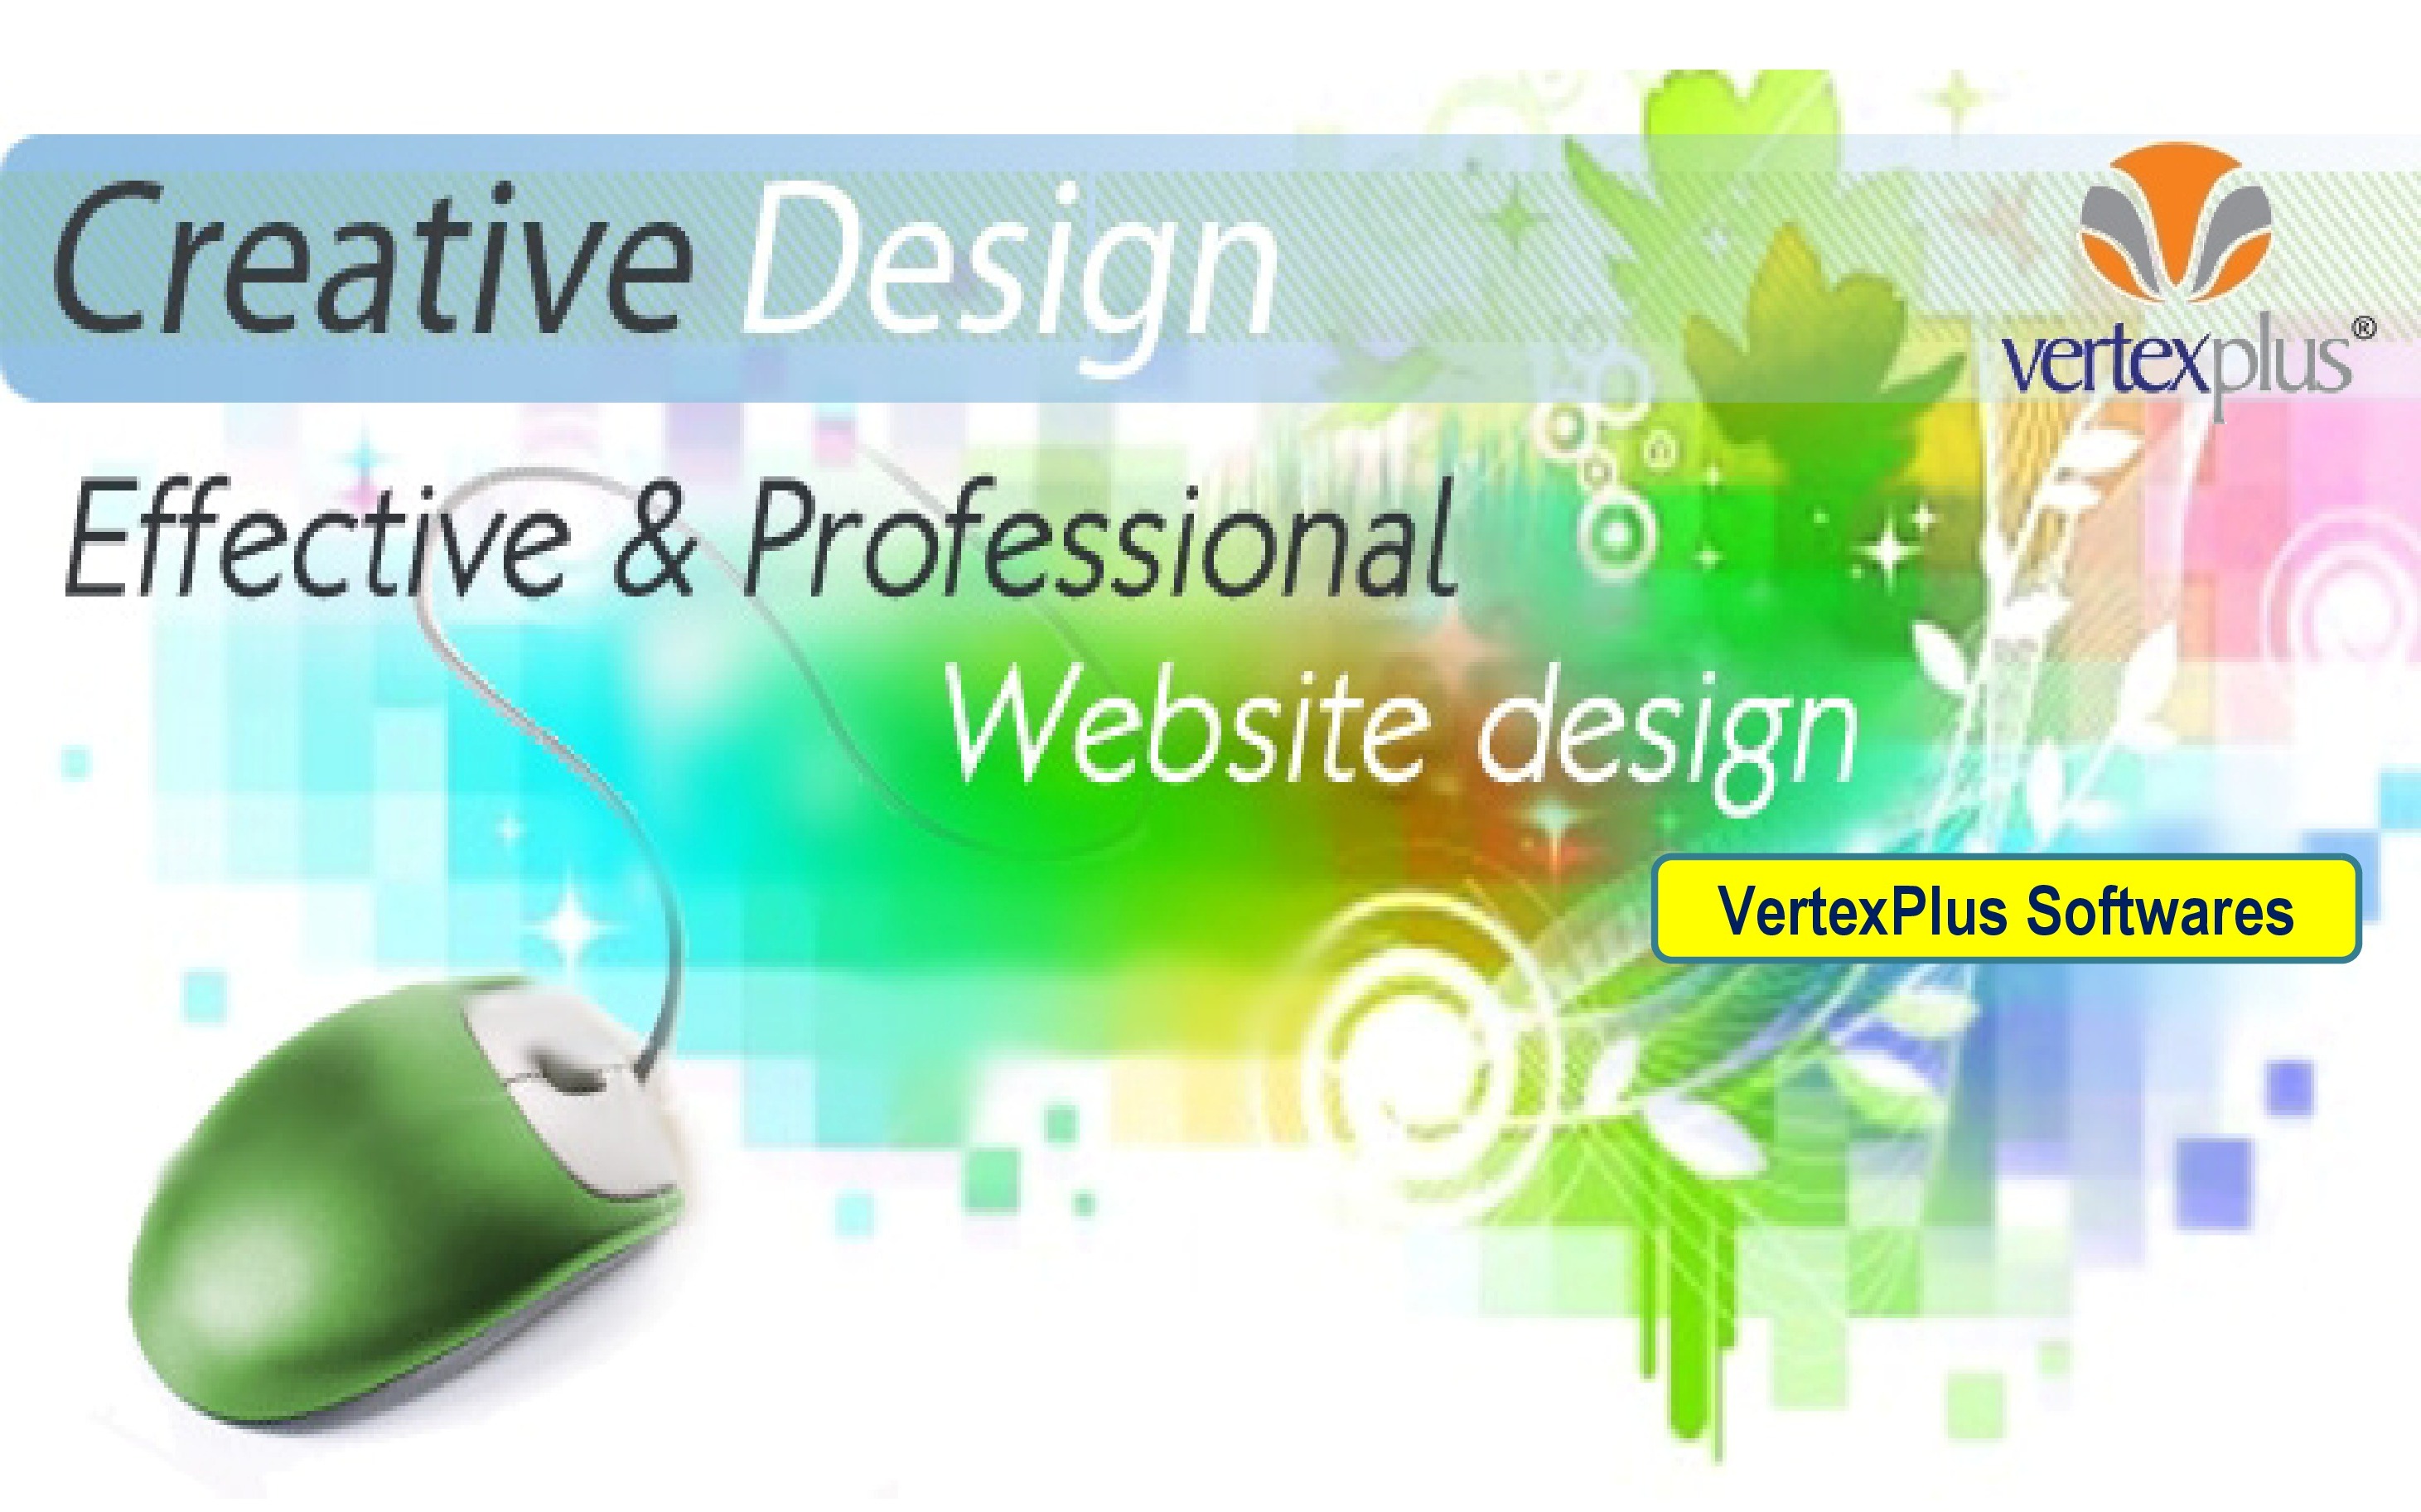 Website Design Services.jpg For more  details visit http://www.vertexplus.com/website-designing.
 by vertexplus